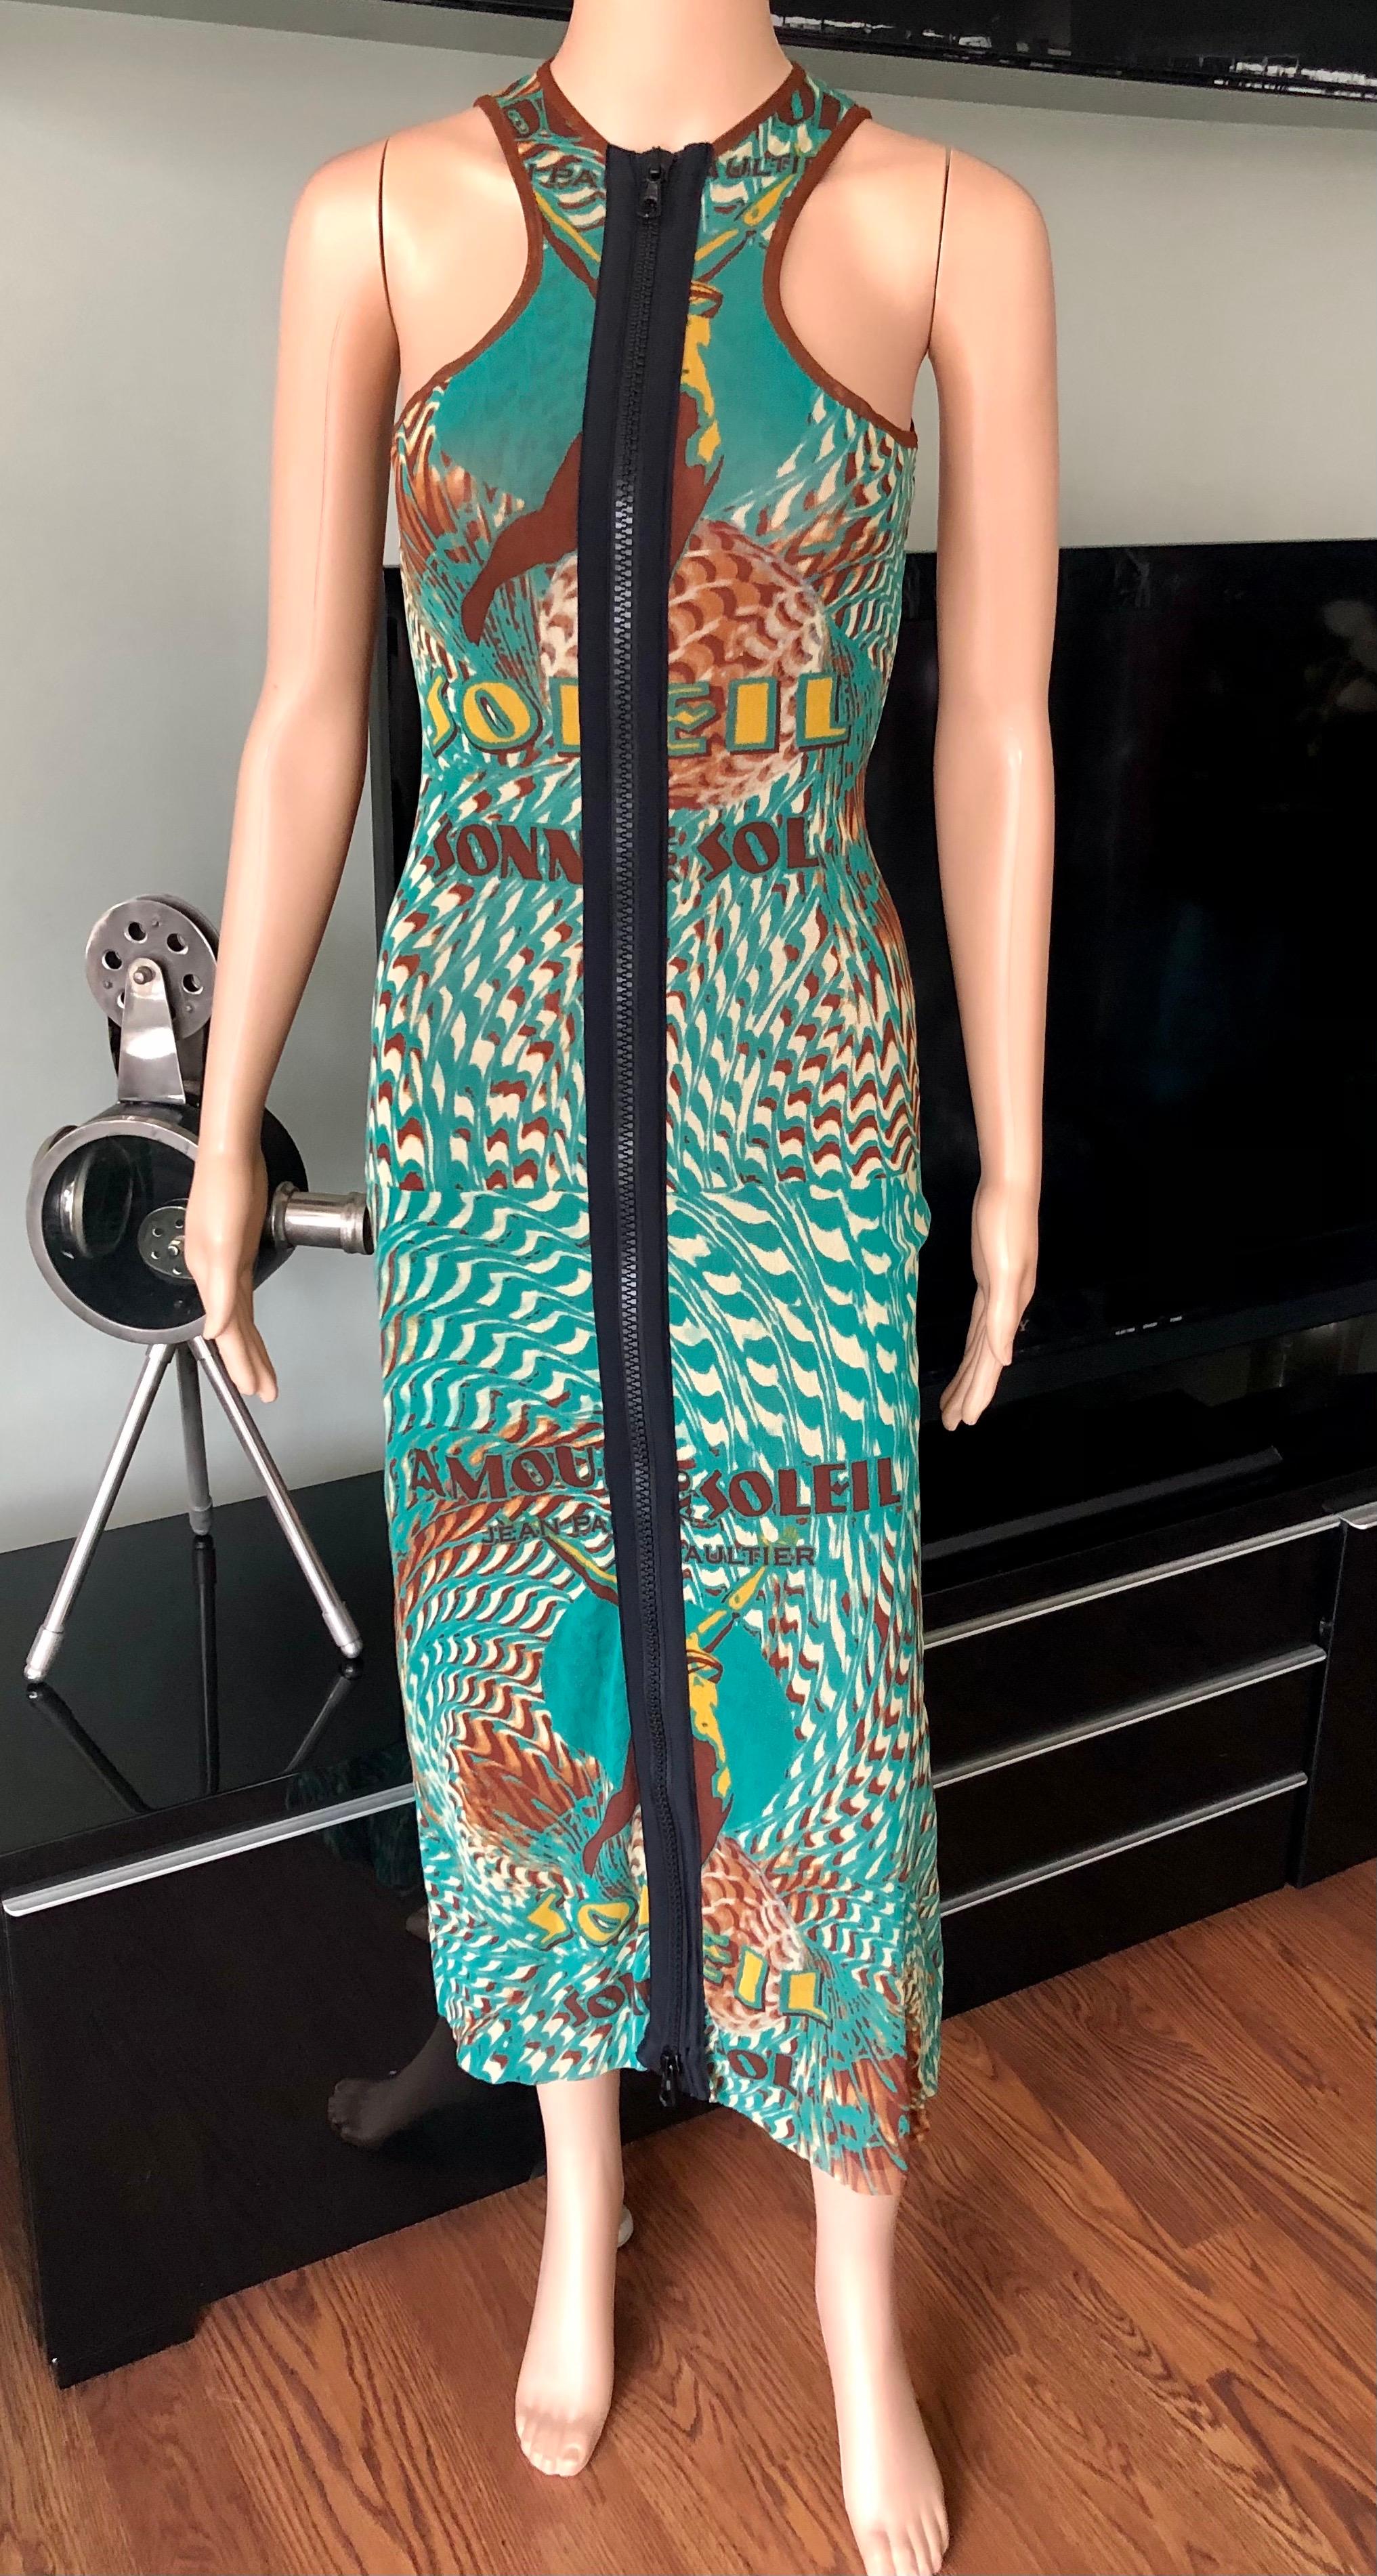 Jean Paul Gaultier Soleil S/S 1999 Amour au Soleil Bodycon Mesh Maxi Dress In Excellent Condition For Sale In Naples, FL